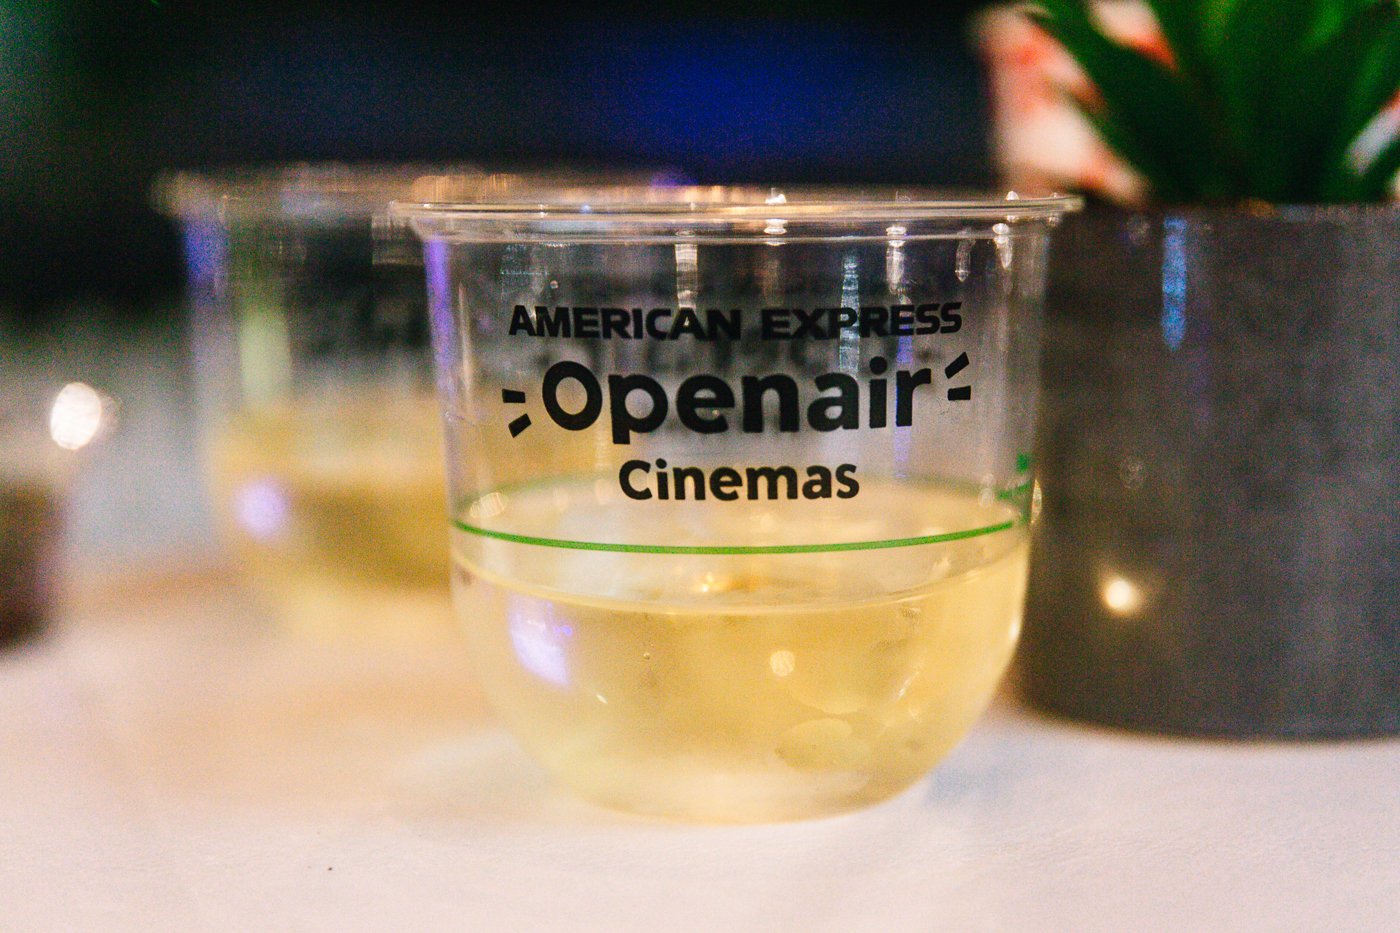 American Express Openair Cinemas opening night